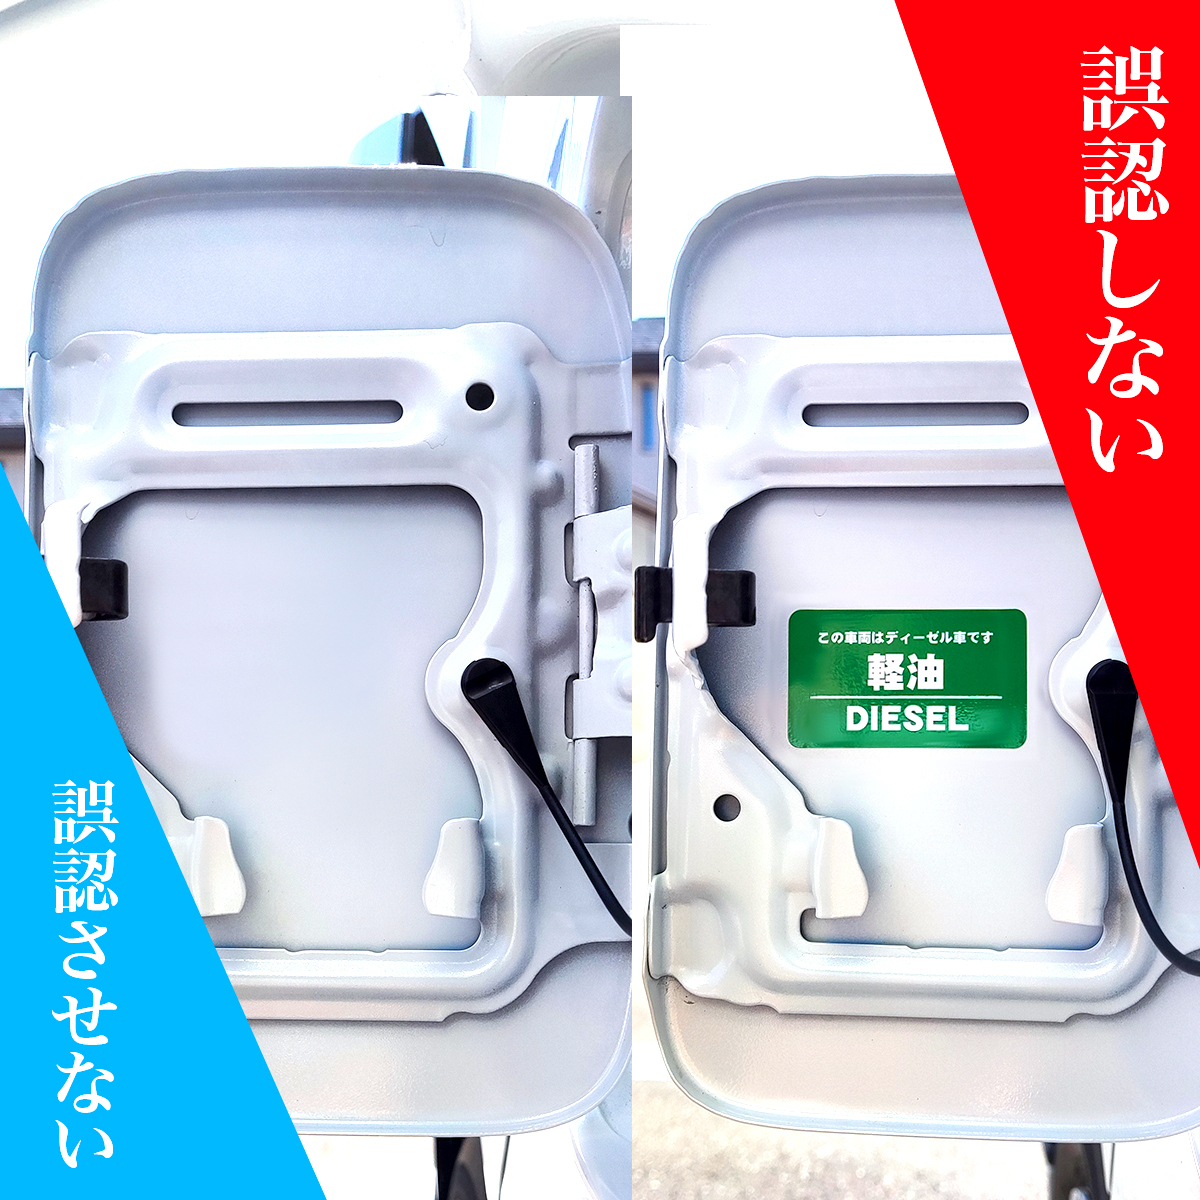 EXPROUD 給油口キャップ用燃料表示ステッカー&長方形ステッカーセット ディーゼル 軽油 油種間違い防止 グリーン FCS-B 日本製-B09WDHXSMC_画像3